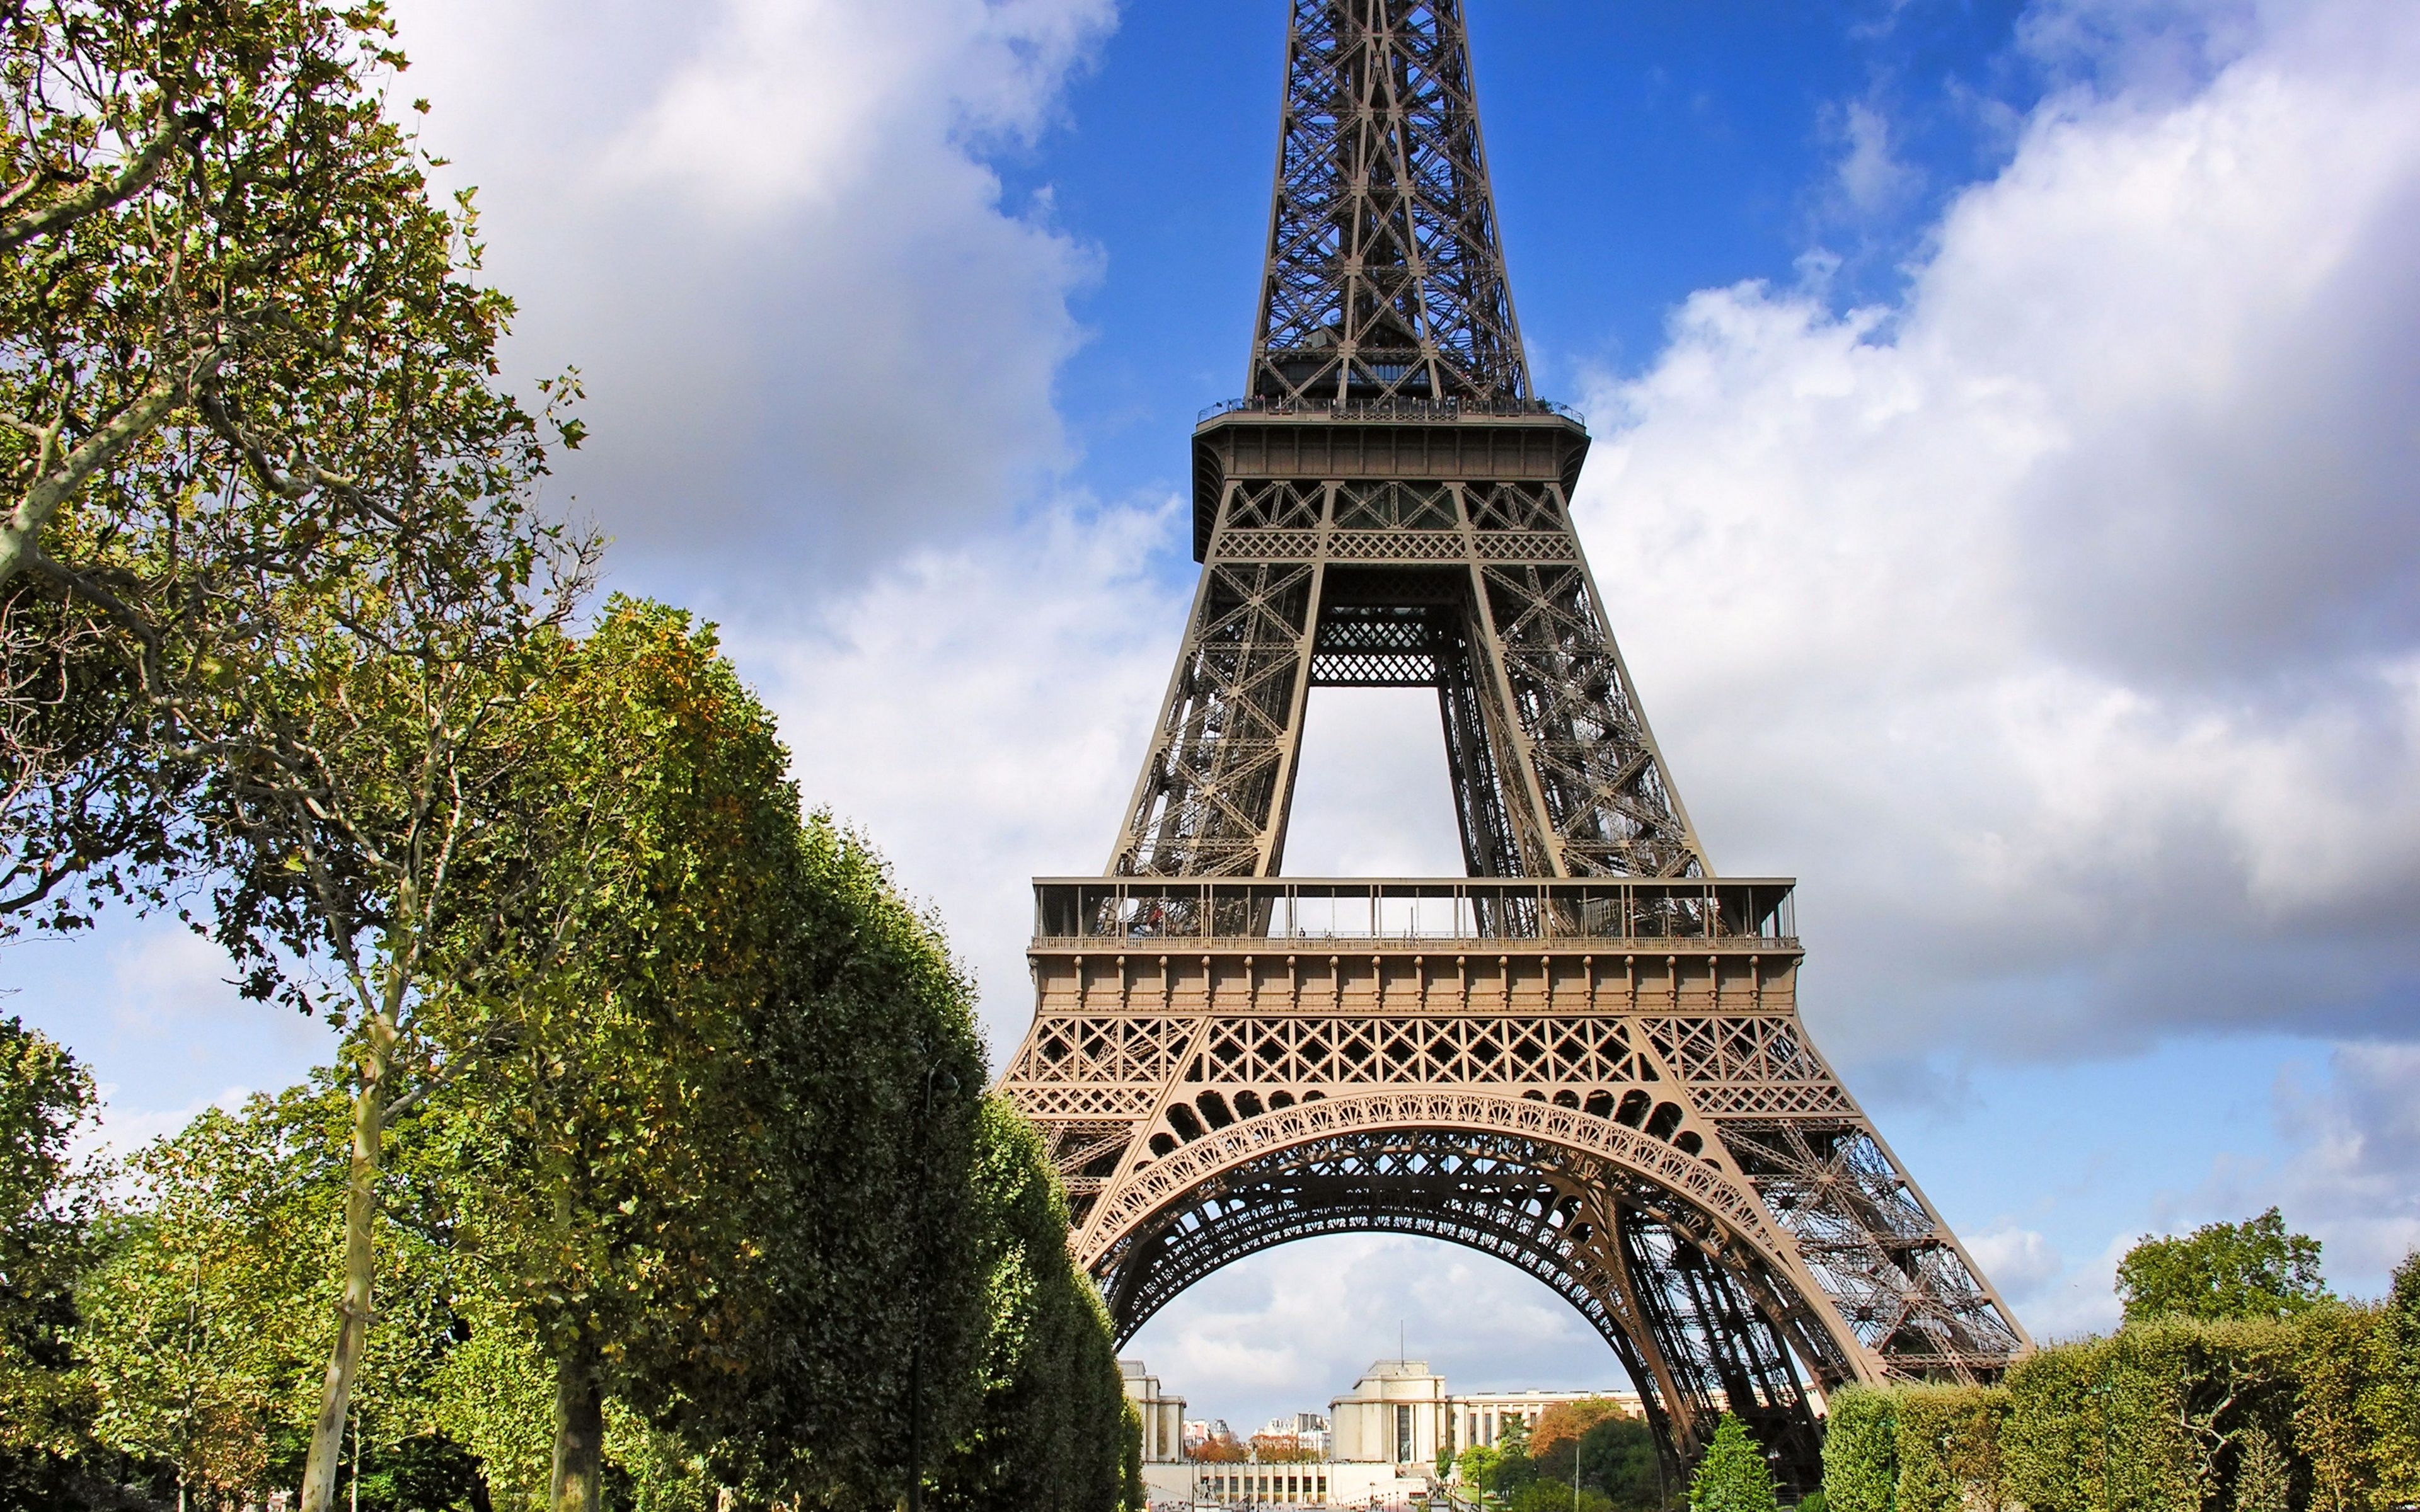 Eiffel Tower ultra HD 4K Wallpaper. Image background Paris, France